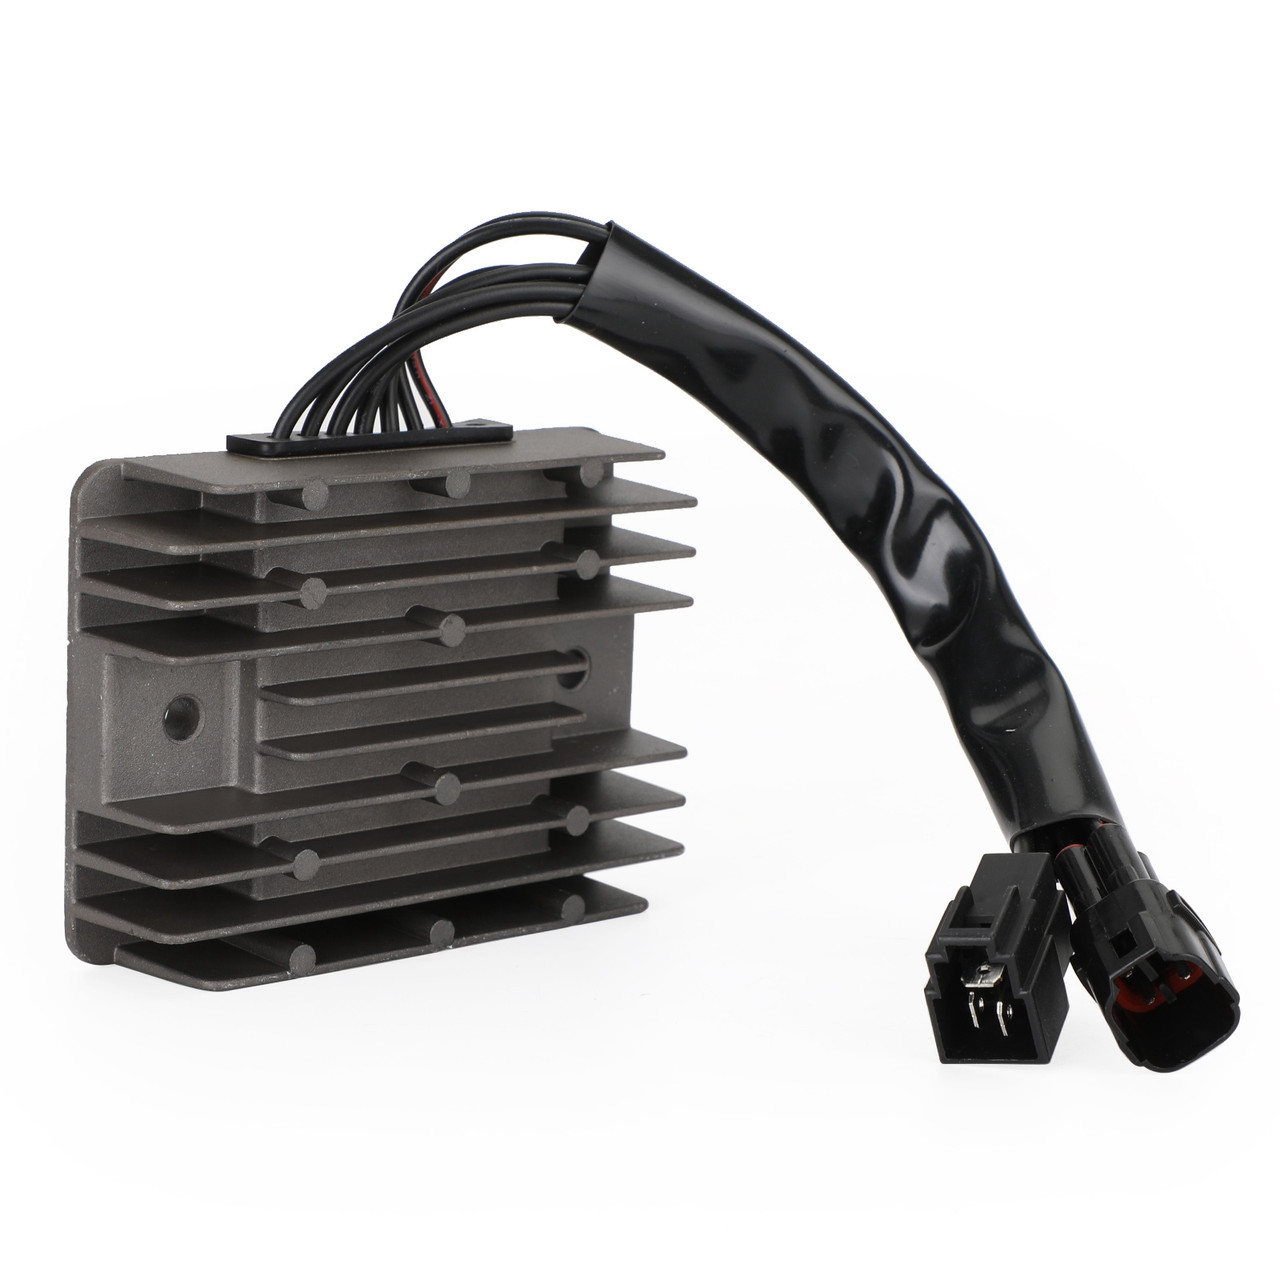 Magneto Coil Stator + Voltage Regulator + Gasket Assy Fit for Suzuki VL800 Boulevard C50 05-19 VL800C C50C 06-14